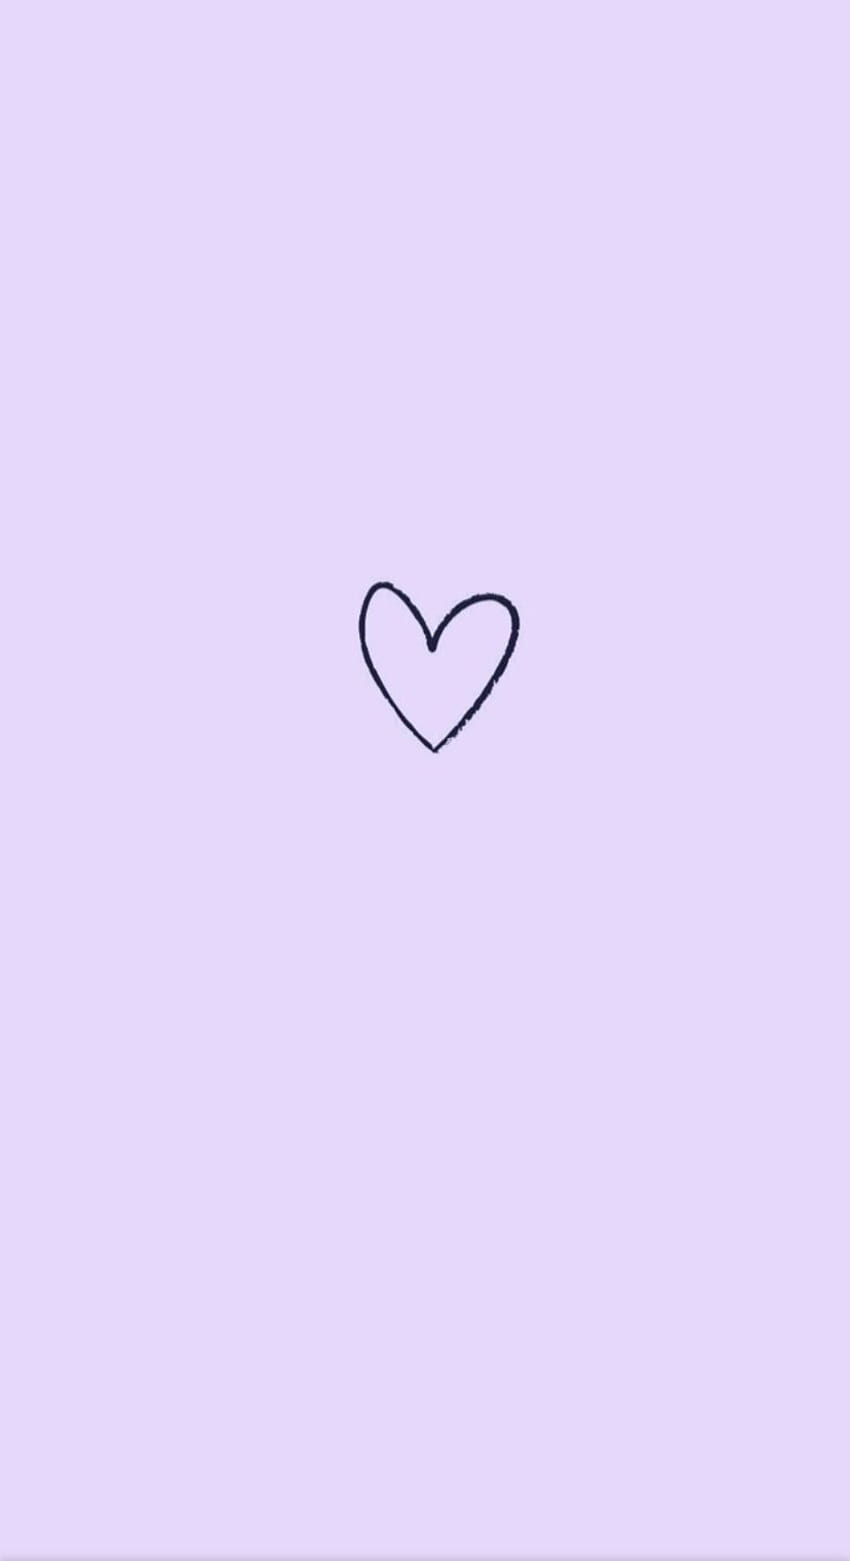 Hati lavender, estetika hati ungu wallpaper ponsel HD